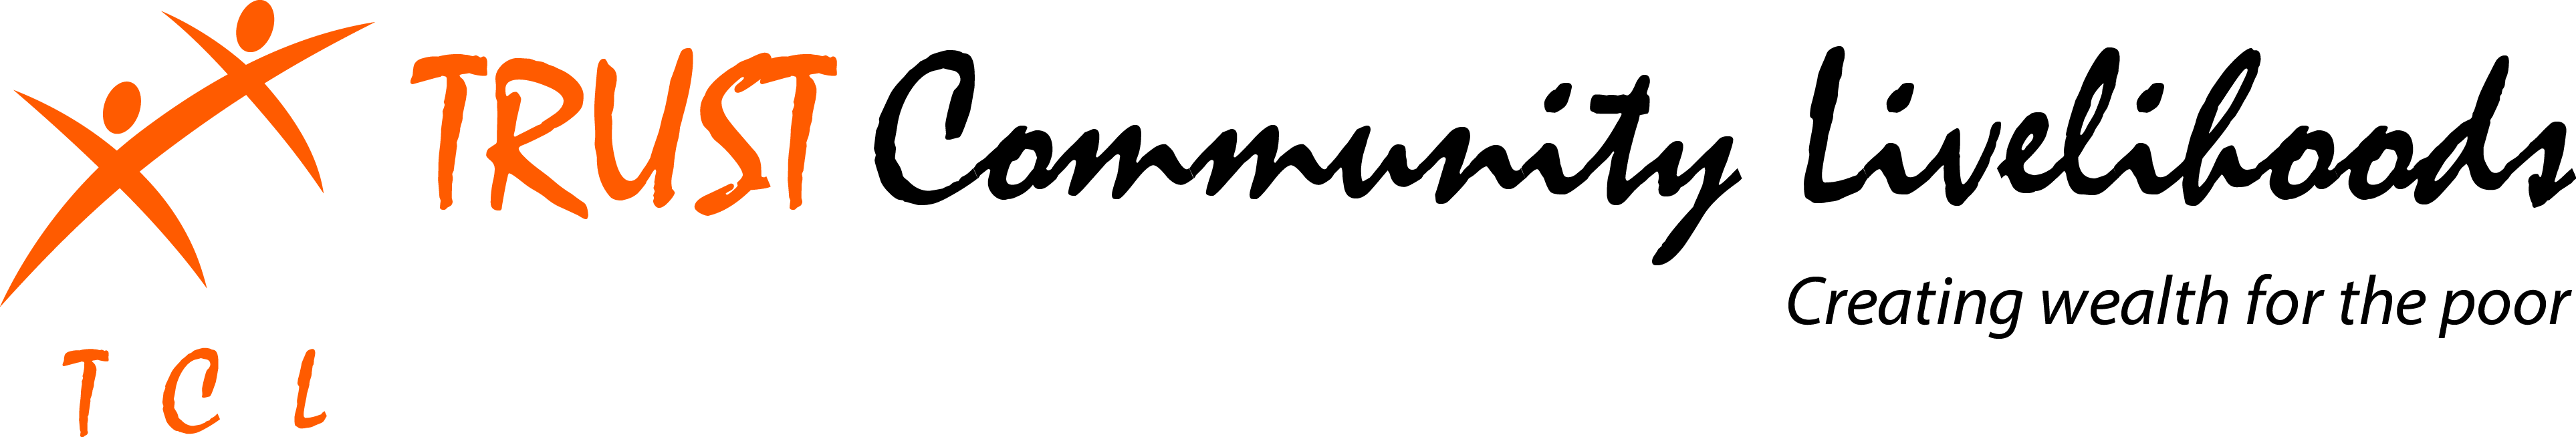 tcl foundation logo